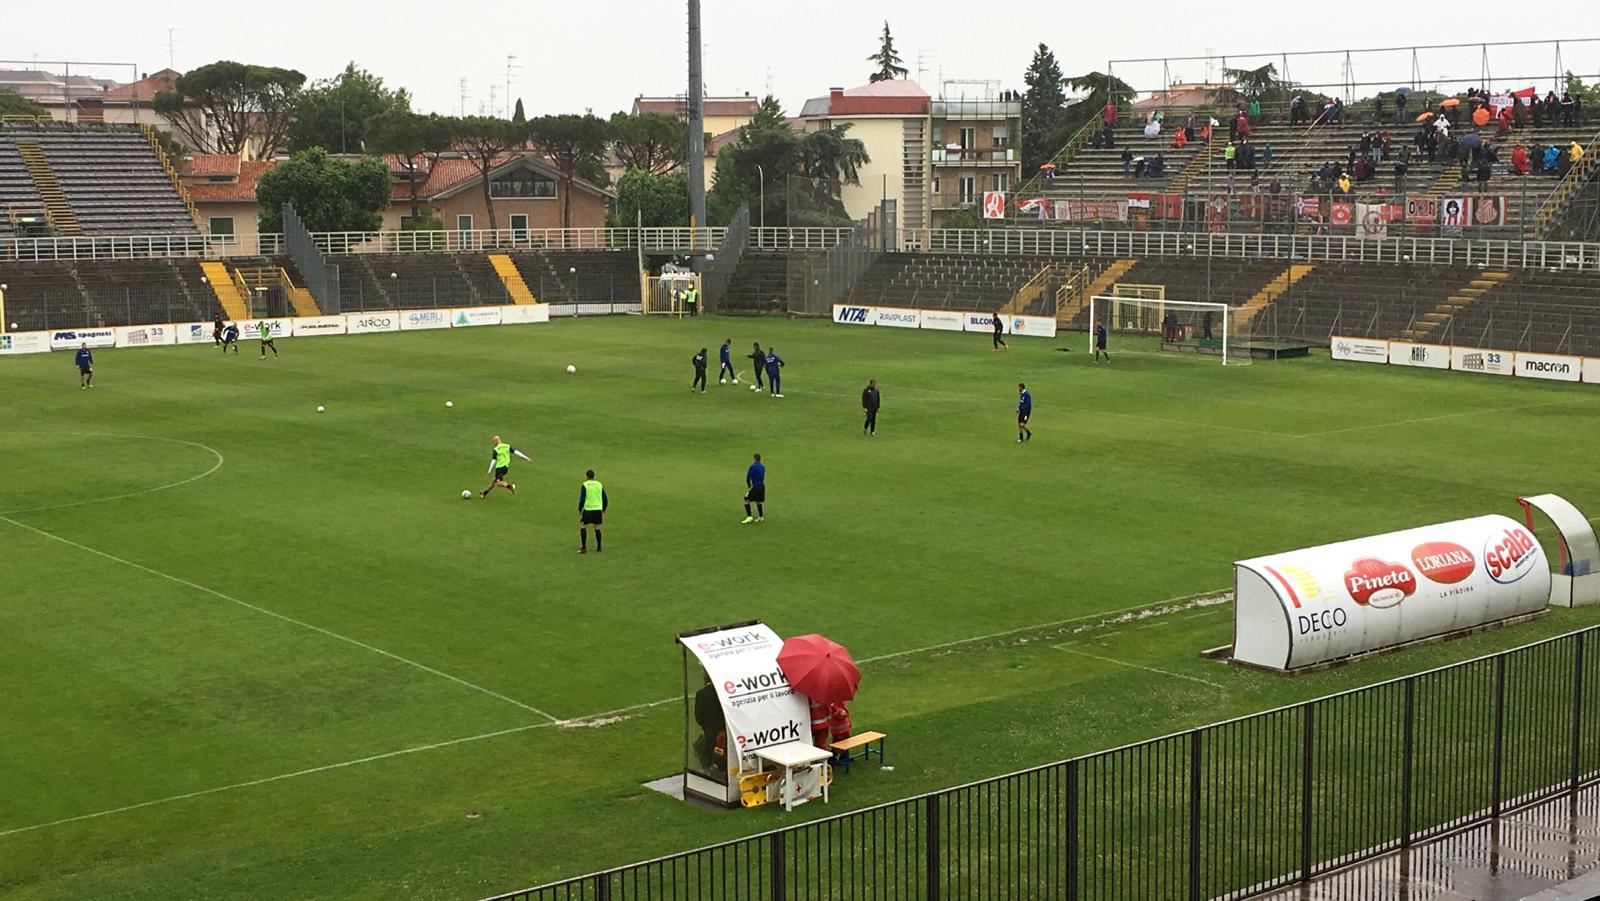 Playoff: Ravenna-L.R. Vicenza 1-1